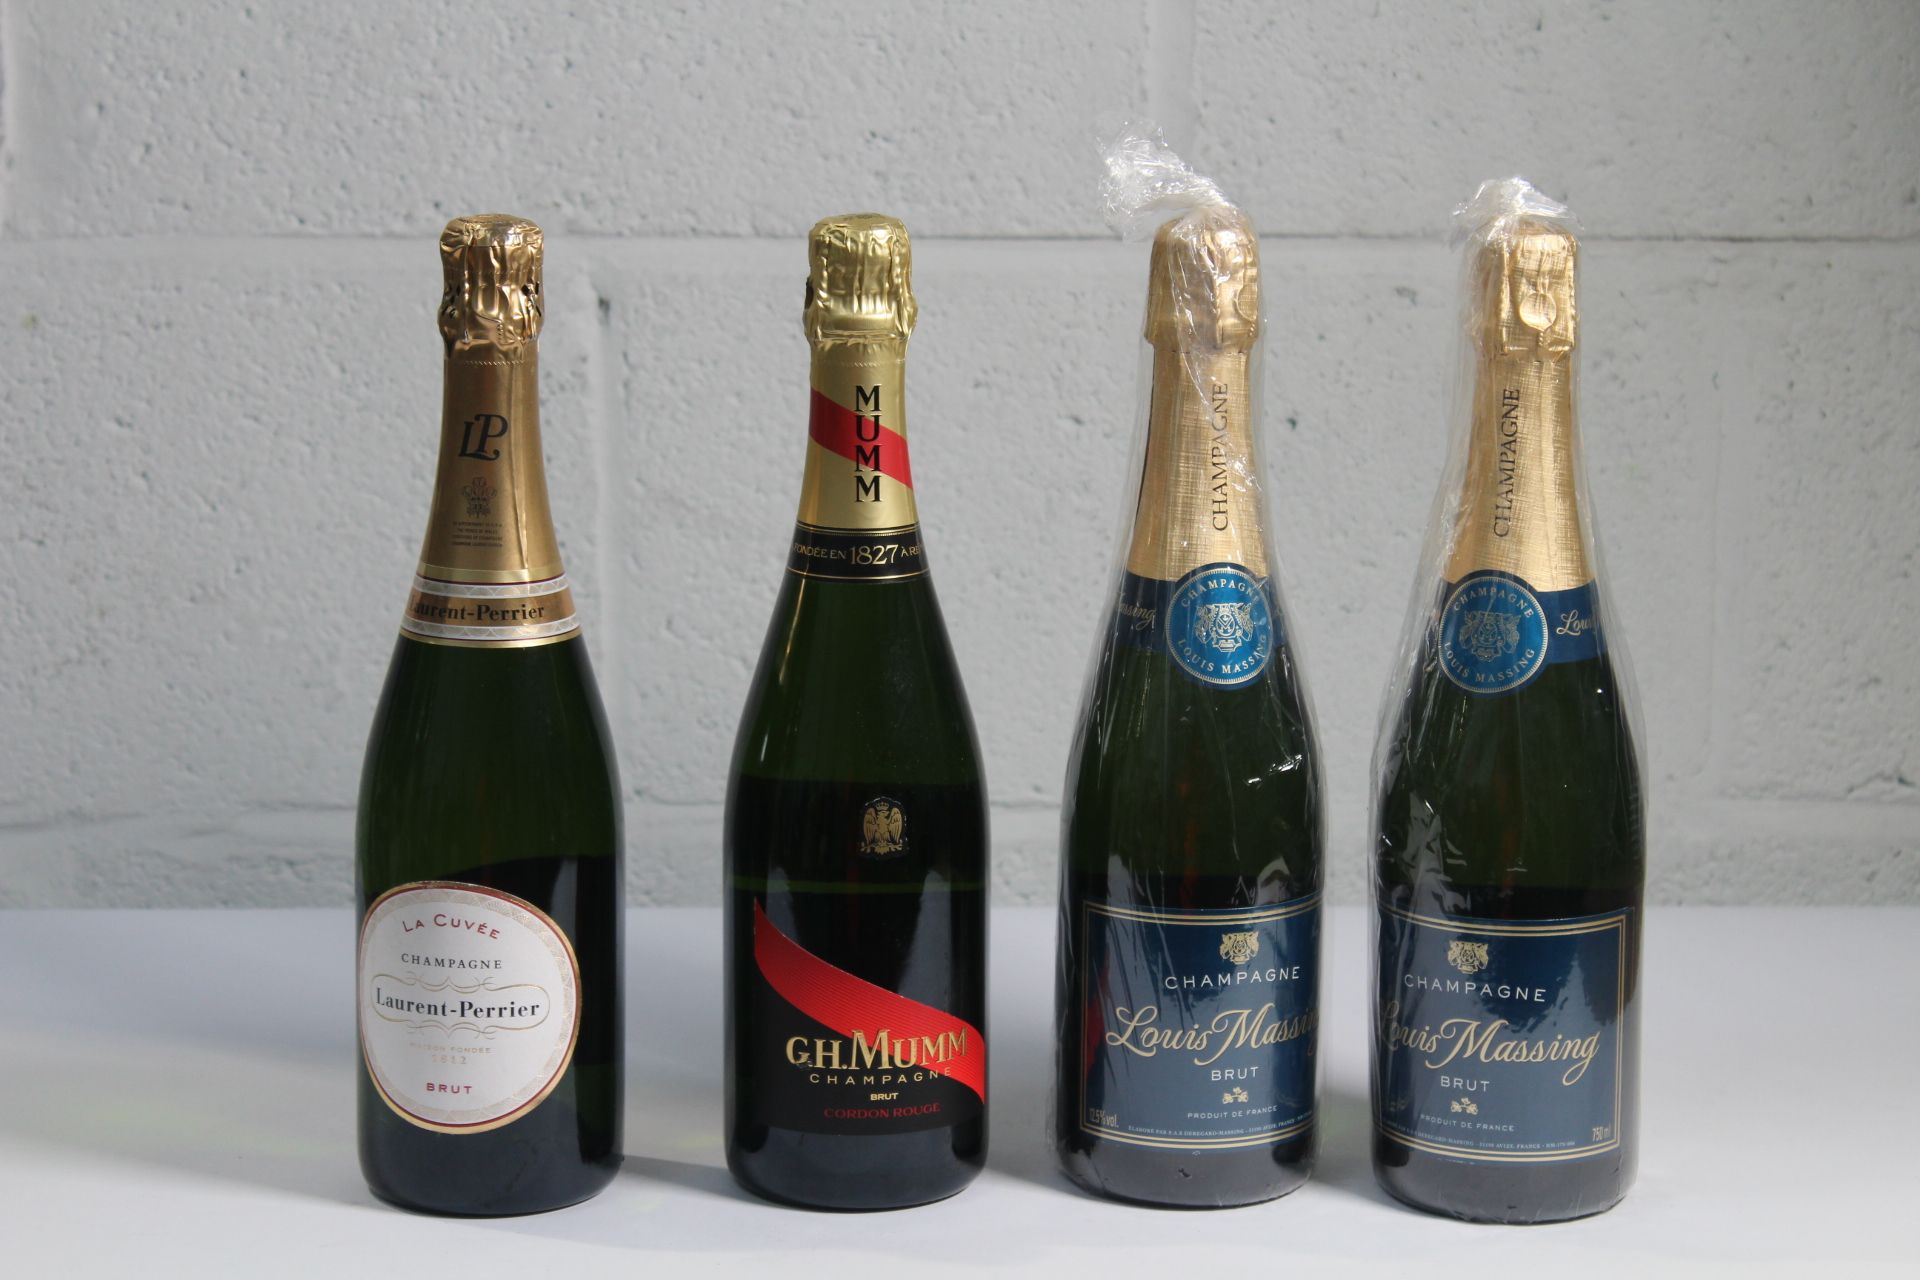 Two Louis Massing Brut Champagne 2 x 750ml, G.H Mumm Brut Champagne 750ml, Laurent - Perrier Brut Ch